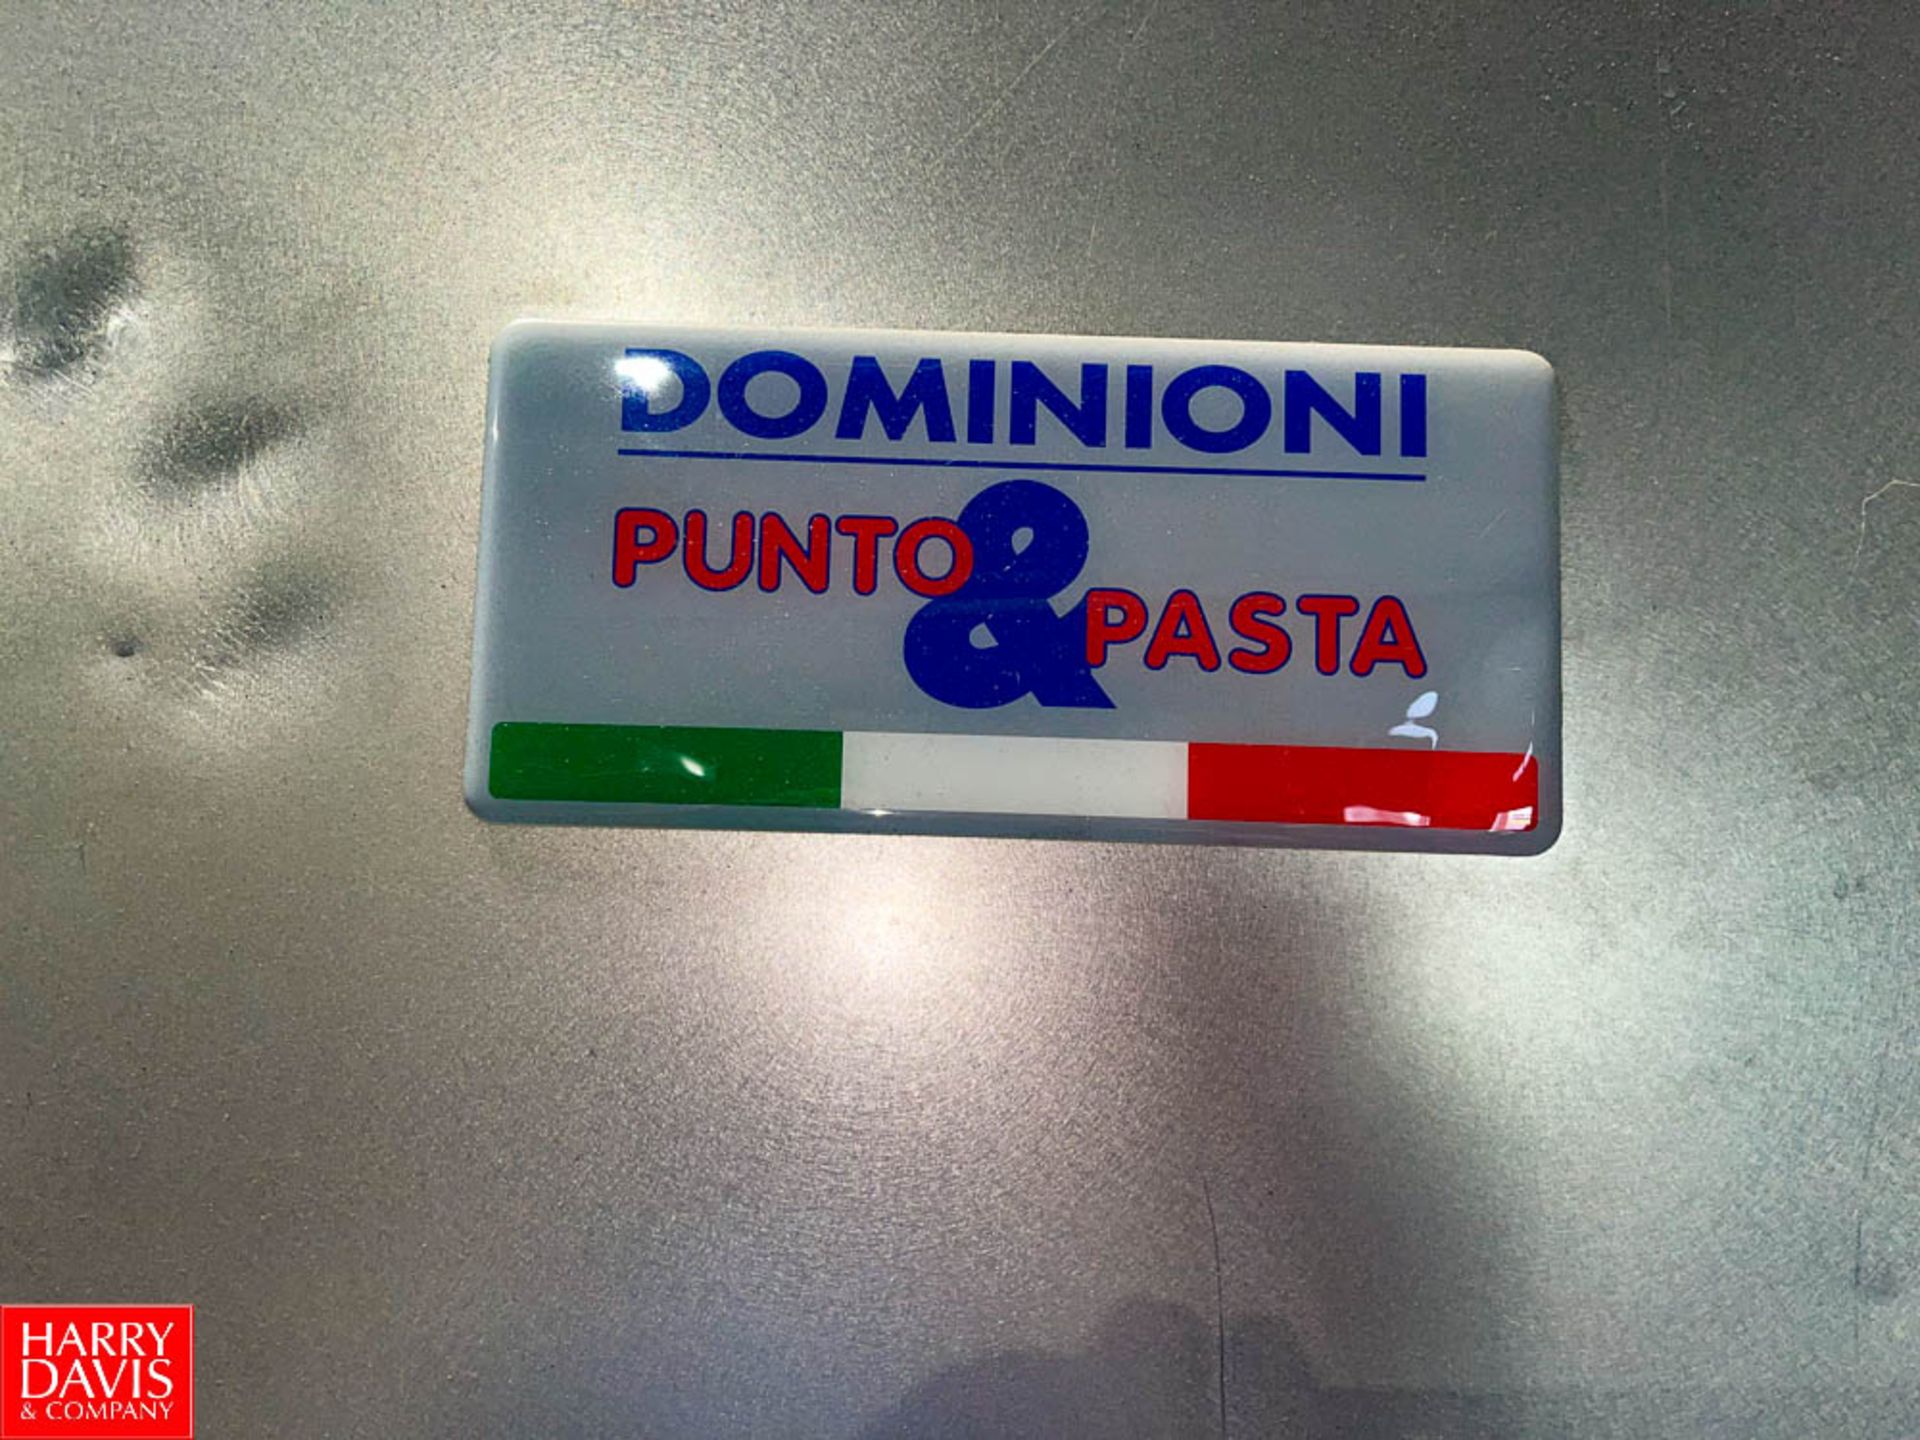 2012 Dominioni Pinto; Pasta S/S Dryer Model: EC69, S/N: 9547, With 38" Wide Belt, Allen Bradley - Image 7 of 7